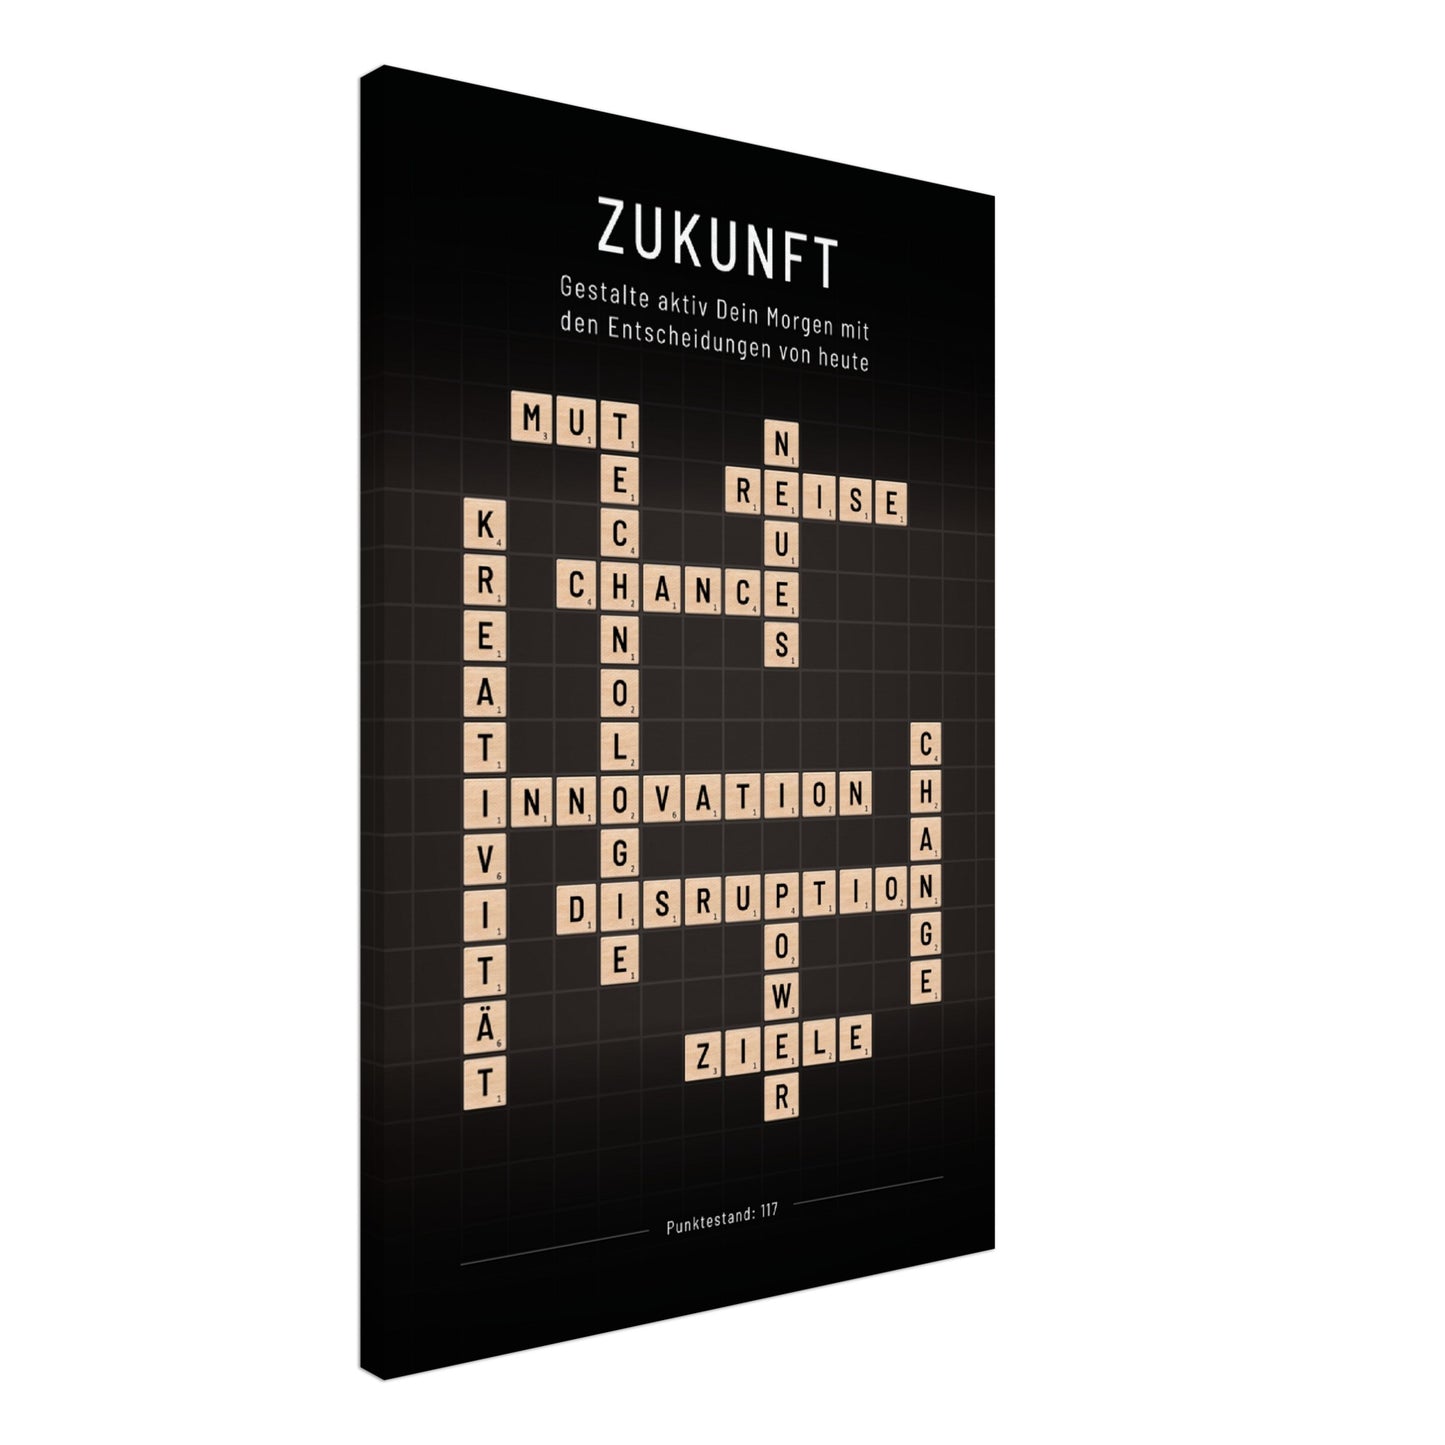 Zukunft - Crossword-Wandbild - Leinwand Schwarzgrau Neutral im Hochformat - Typografie Worte Scrabble Brettspiel Sprache Business Job